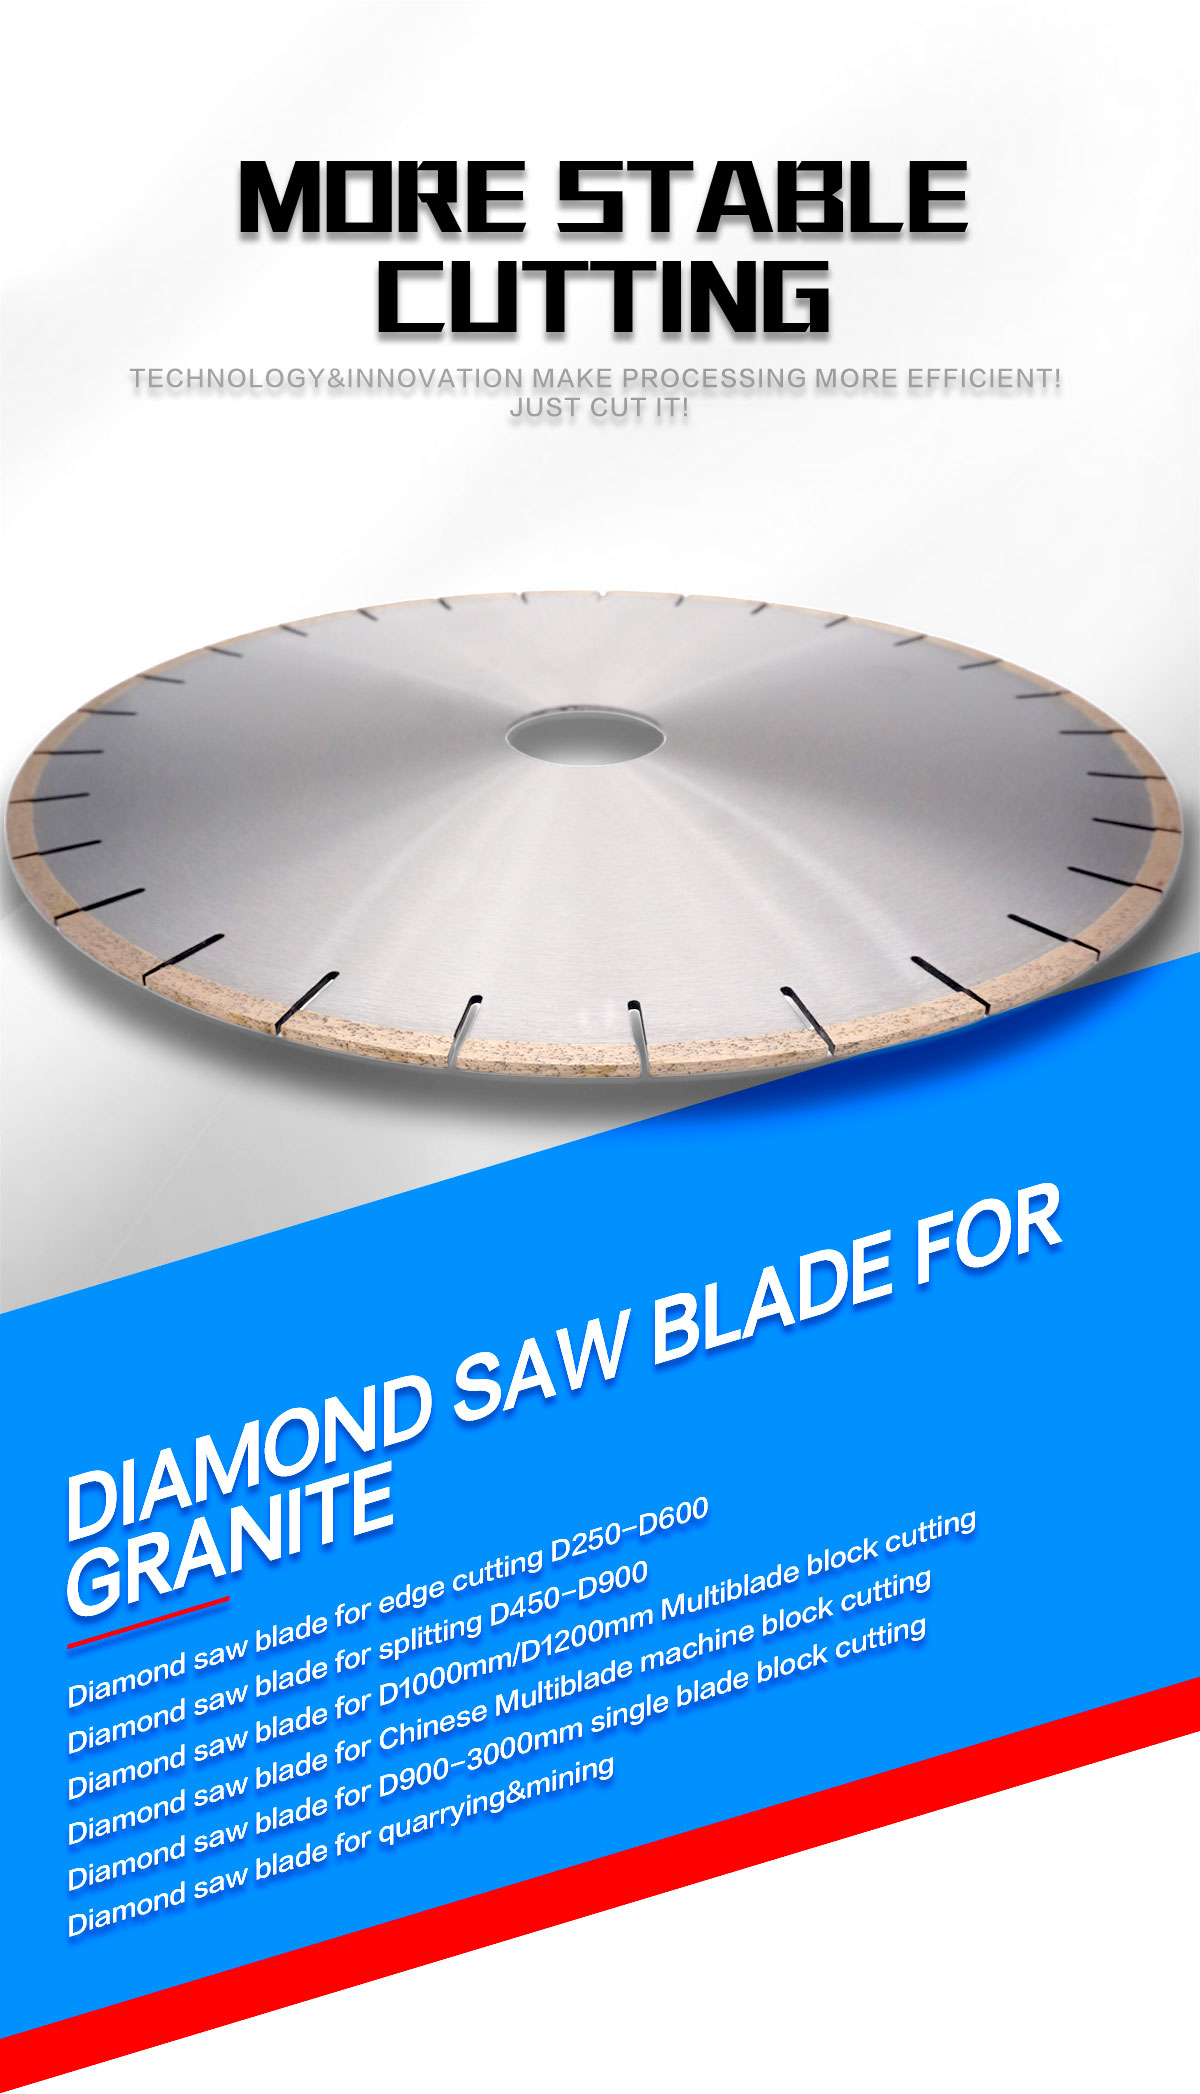 Diamond saw blades for granite cutting